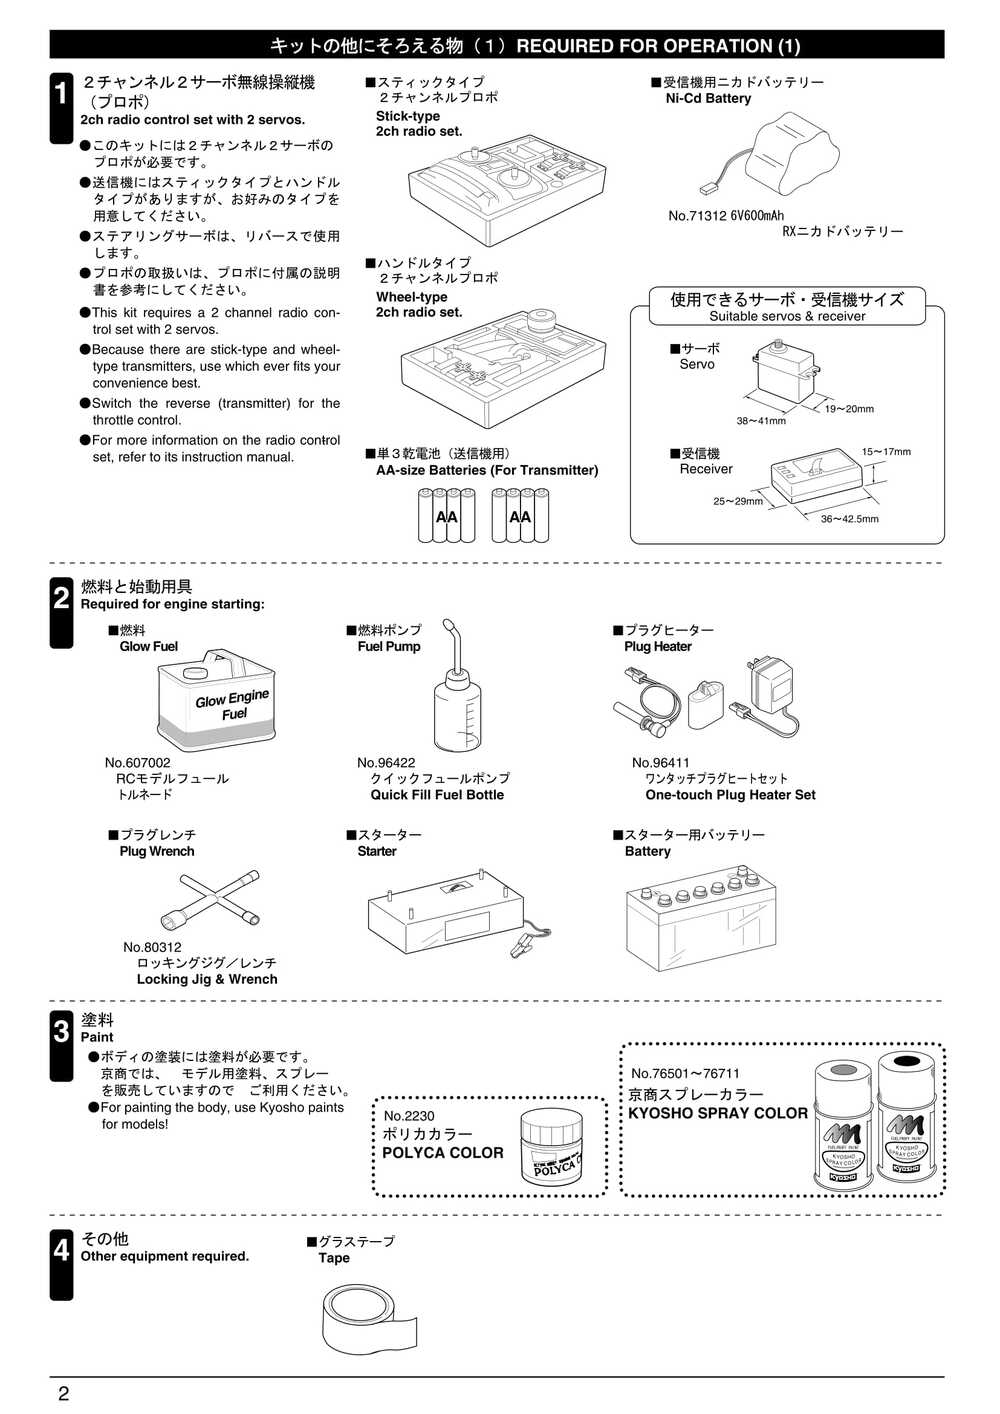 Kyosho - 31041 - Fantom Sports - Manual - Page 02